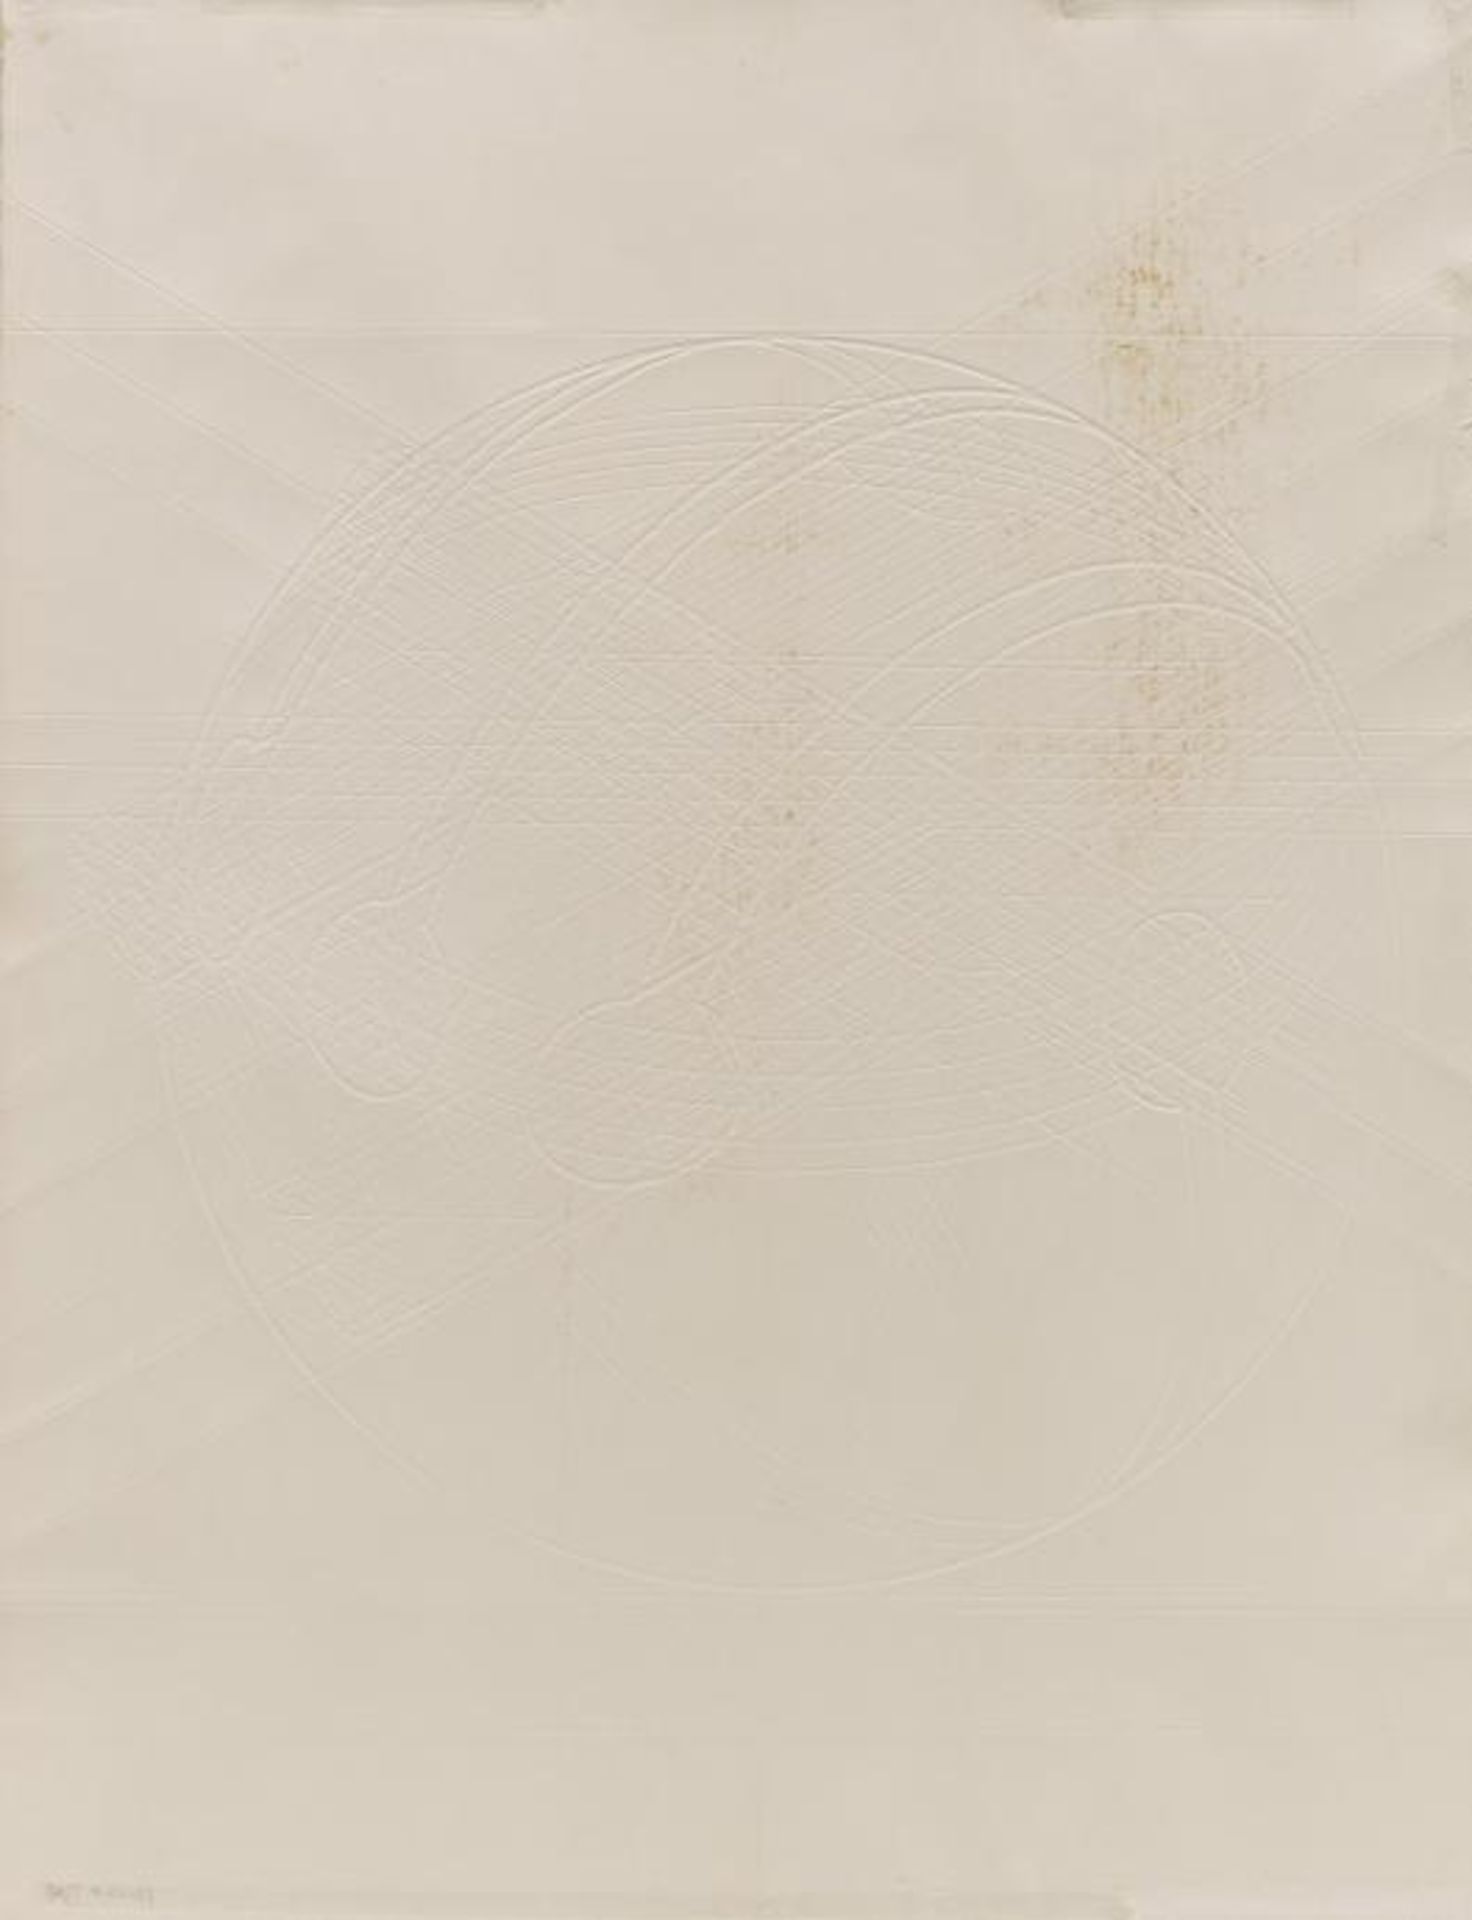 POMODORO, ARNALDO1926 Morciano di RomagnaOhne Titel. 1969. Prägedruck auf Velin. 76 x 57,5cm - Bild 3 aus 4